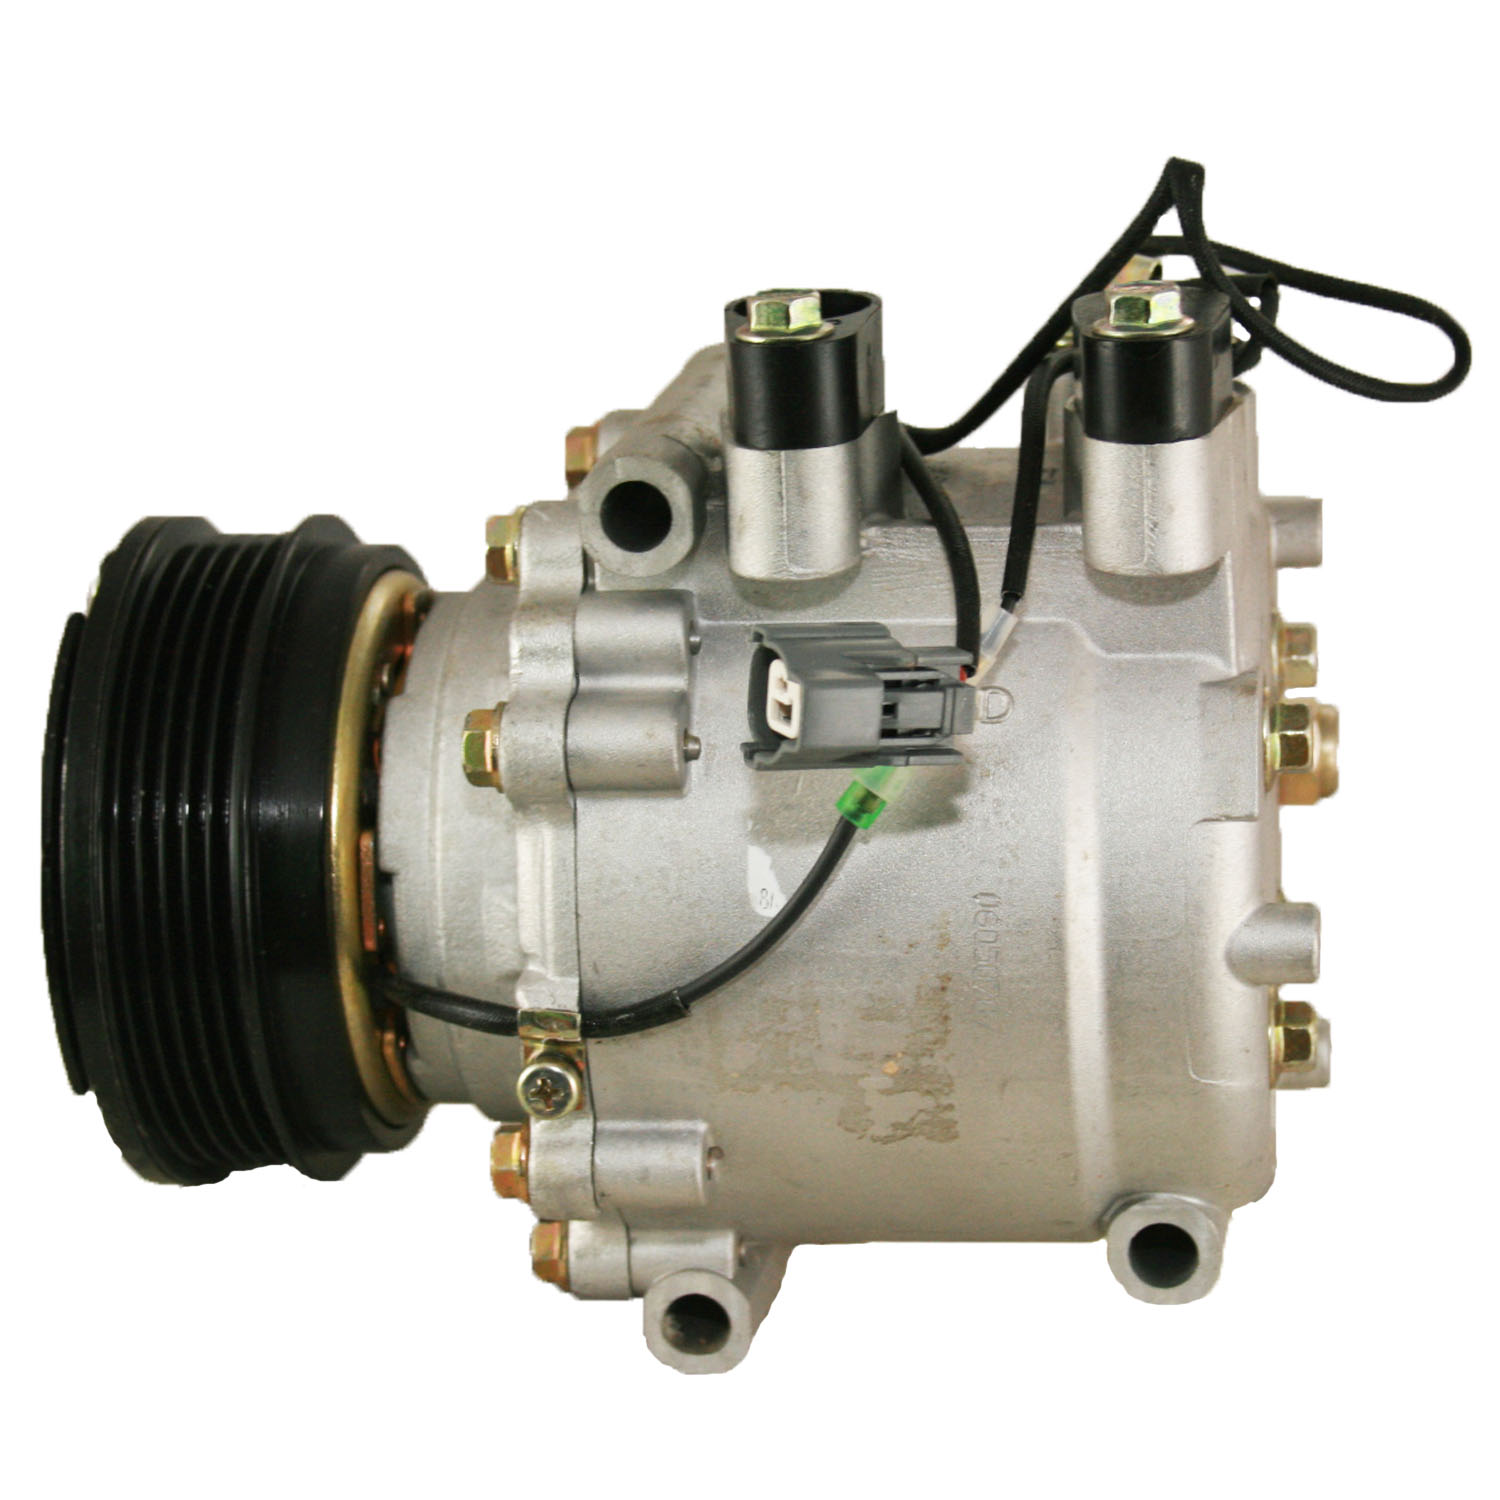 TCW Compressor 40864.501NEW New Product Image field_60b6a13a6e67c